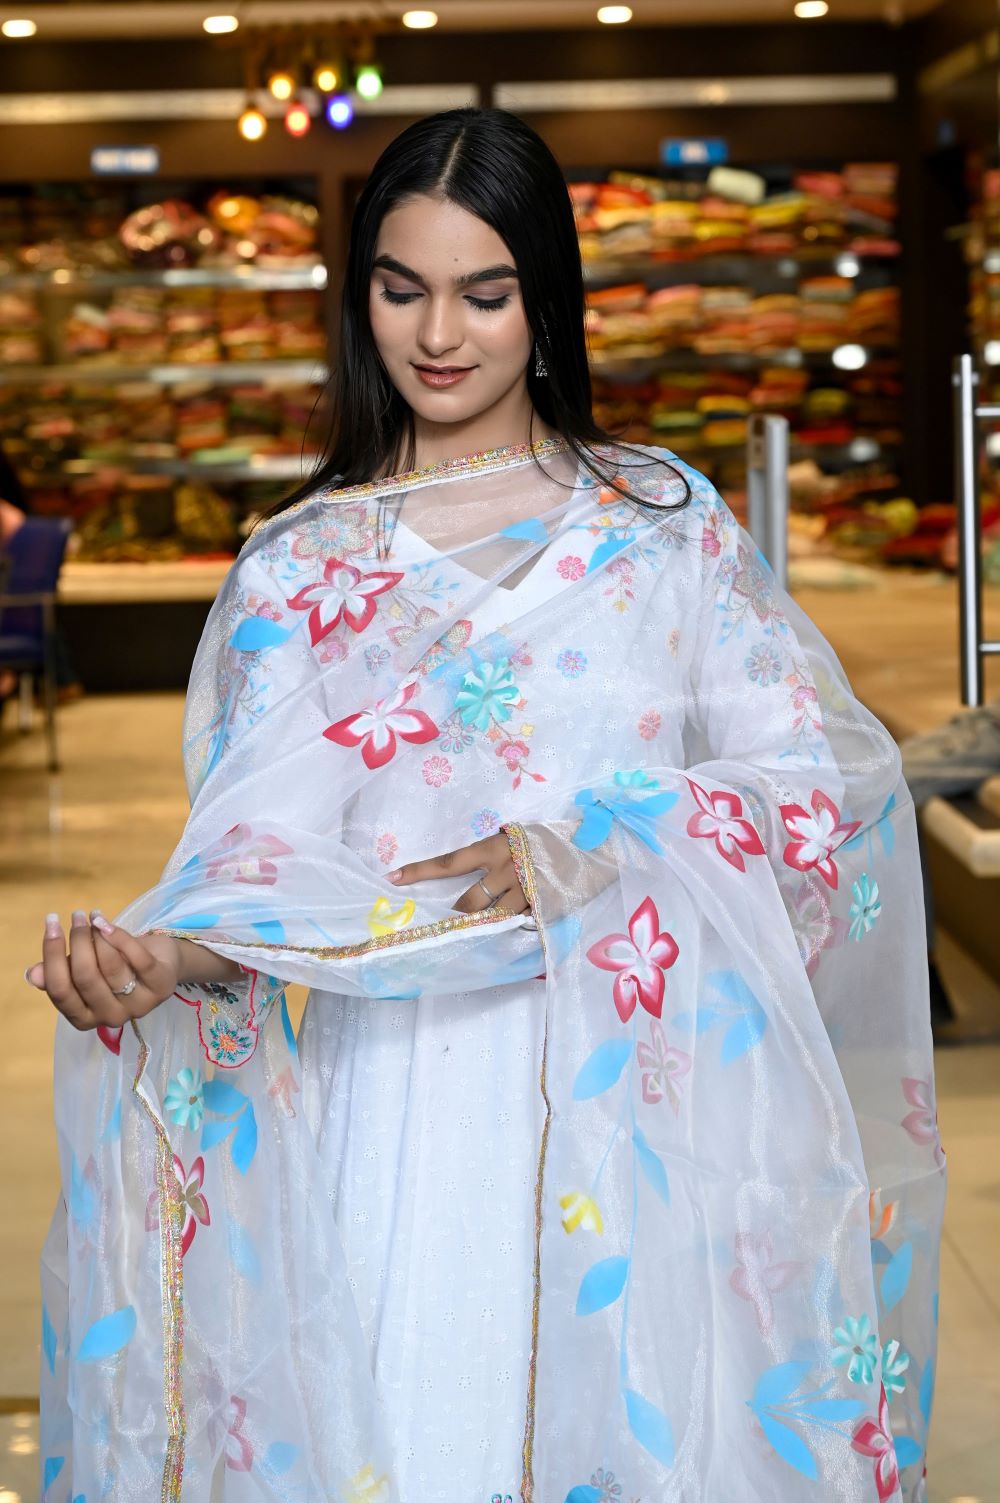 RAMA'S White Color Ethnic Wear Floral Embroidery Cotton 3 pcs Set